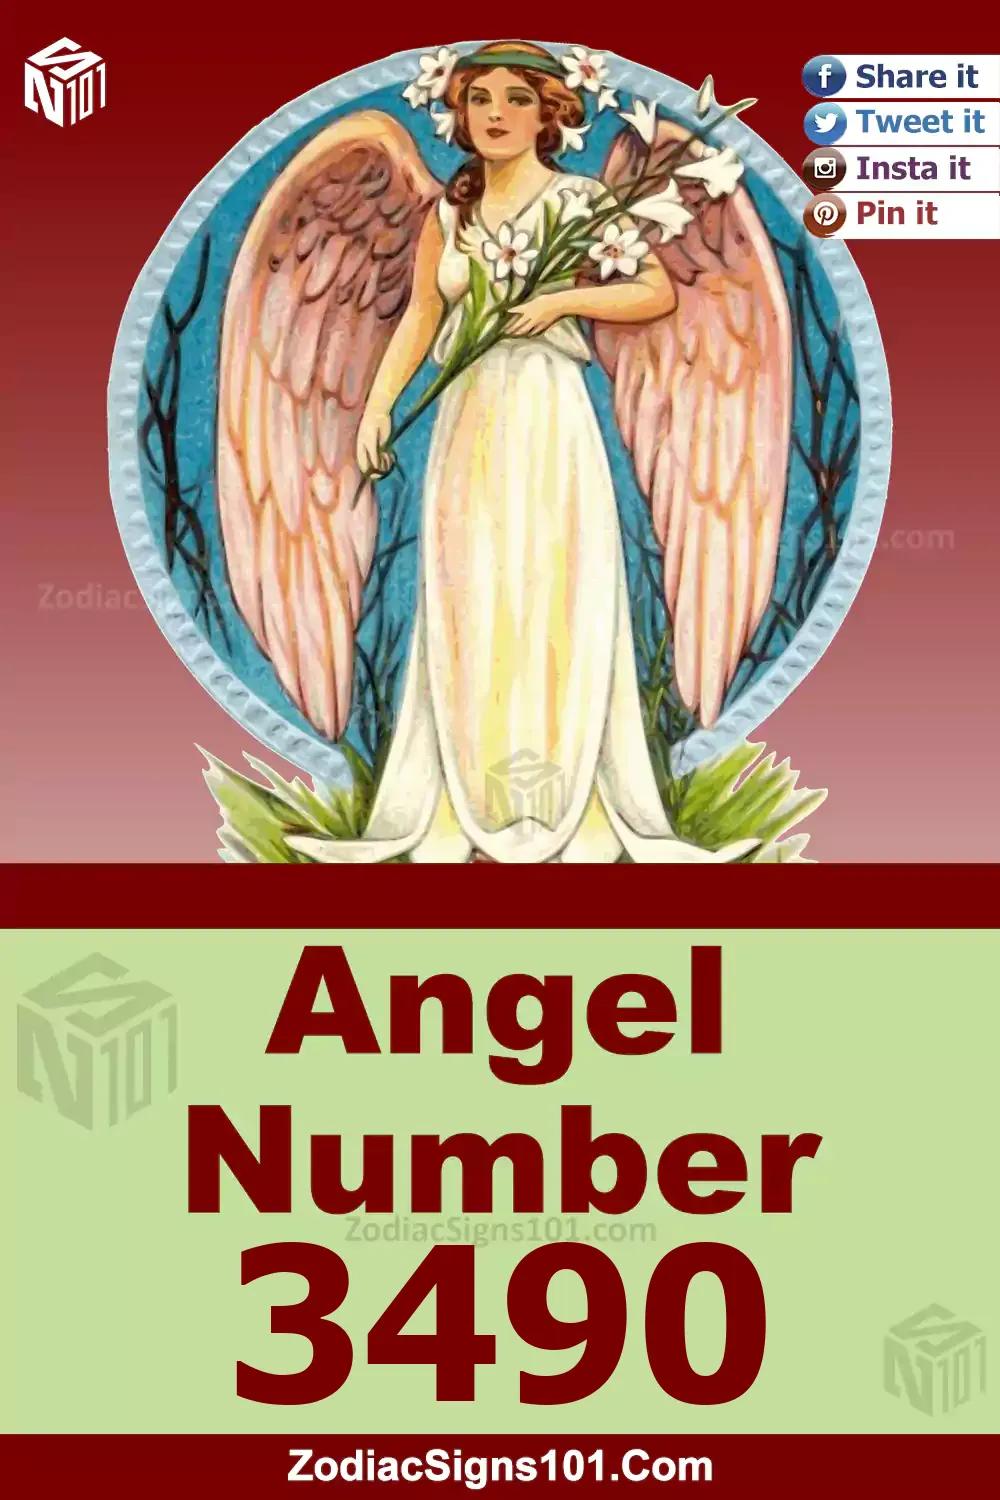 3490-Angel-Number-Meaning.jpg